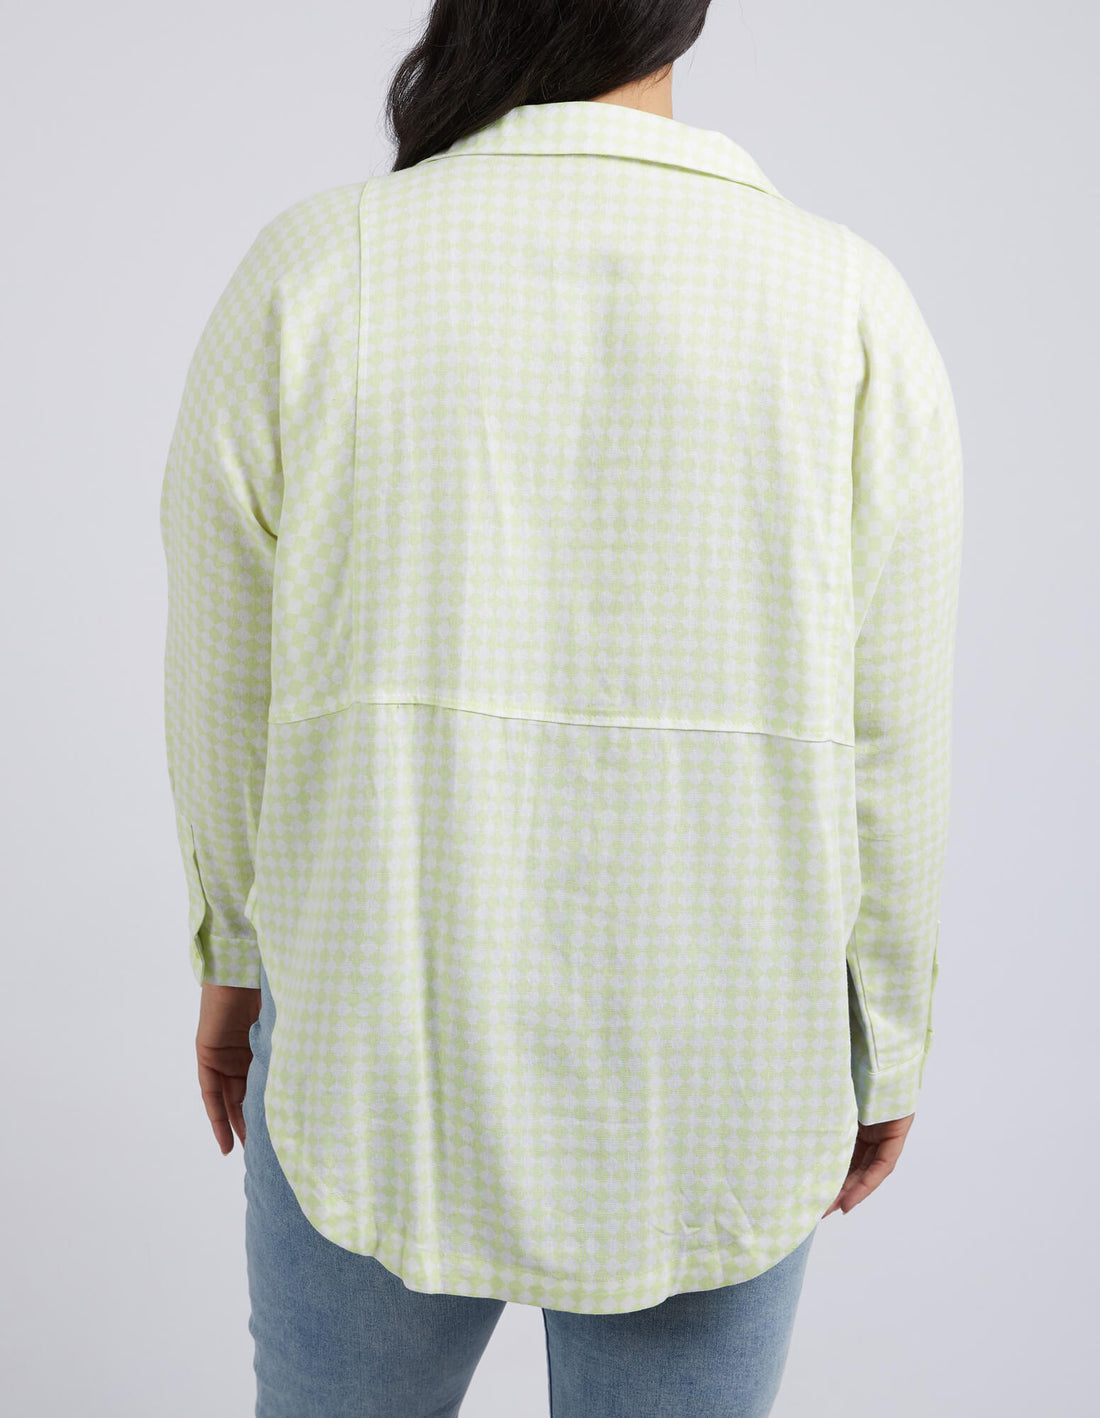 Zest Shirt - Keylime Checkerboard